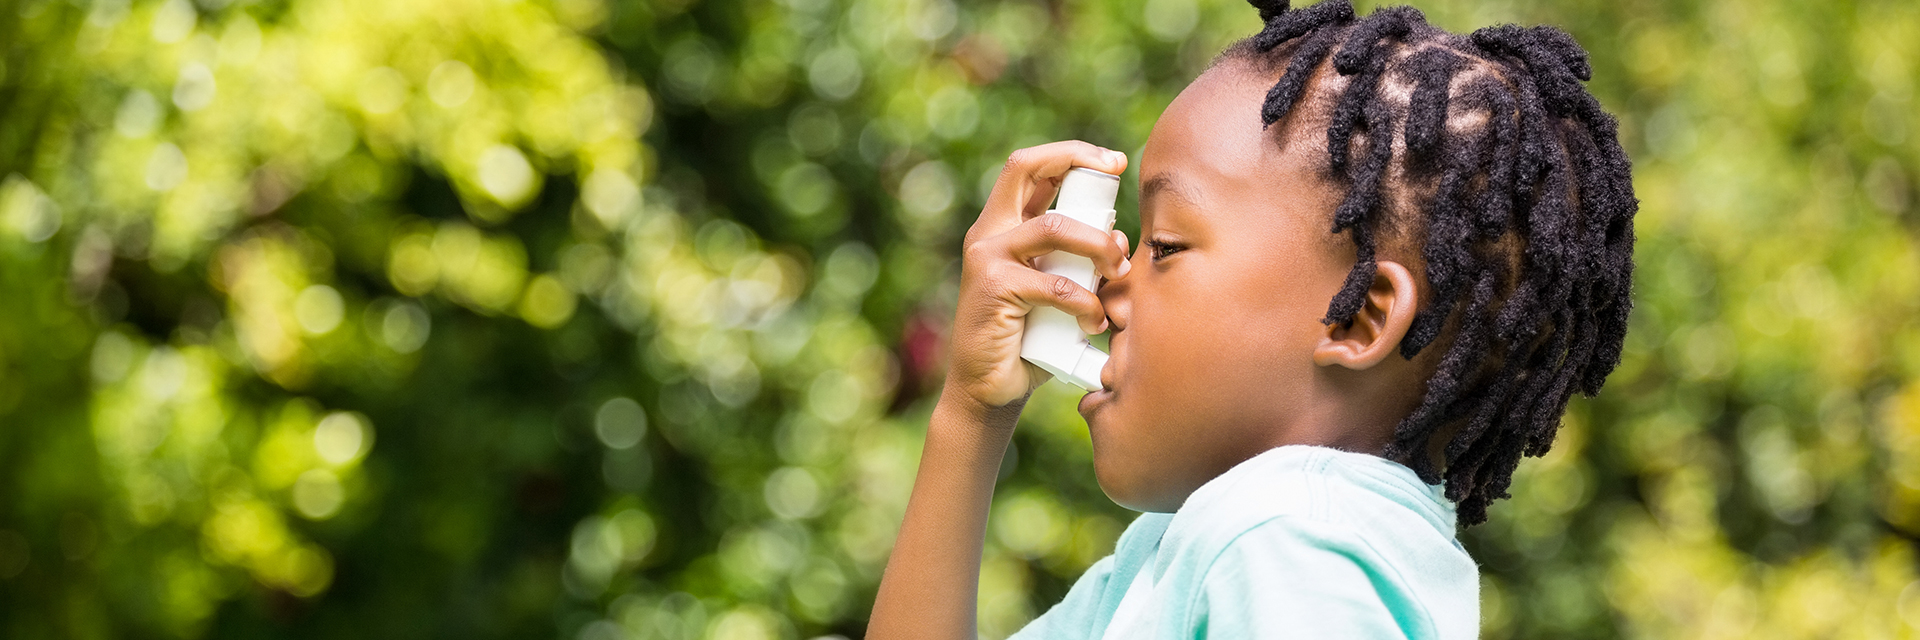 Samaziniet astmas sindromu